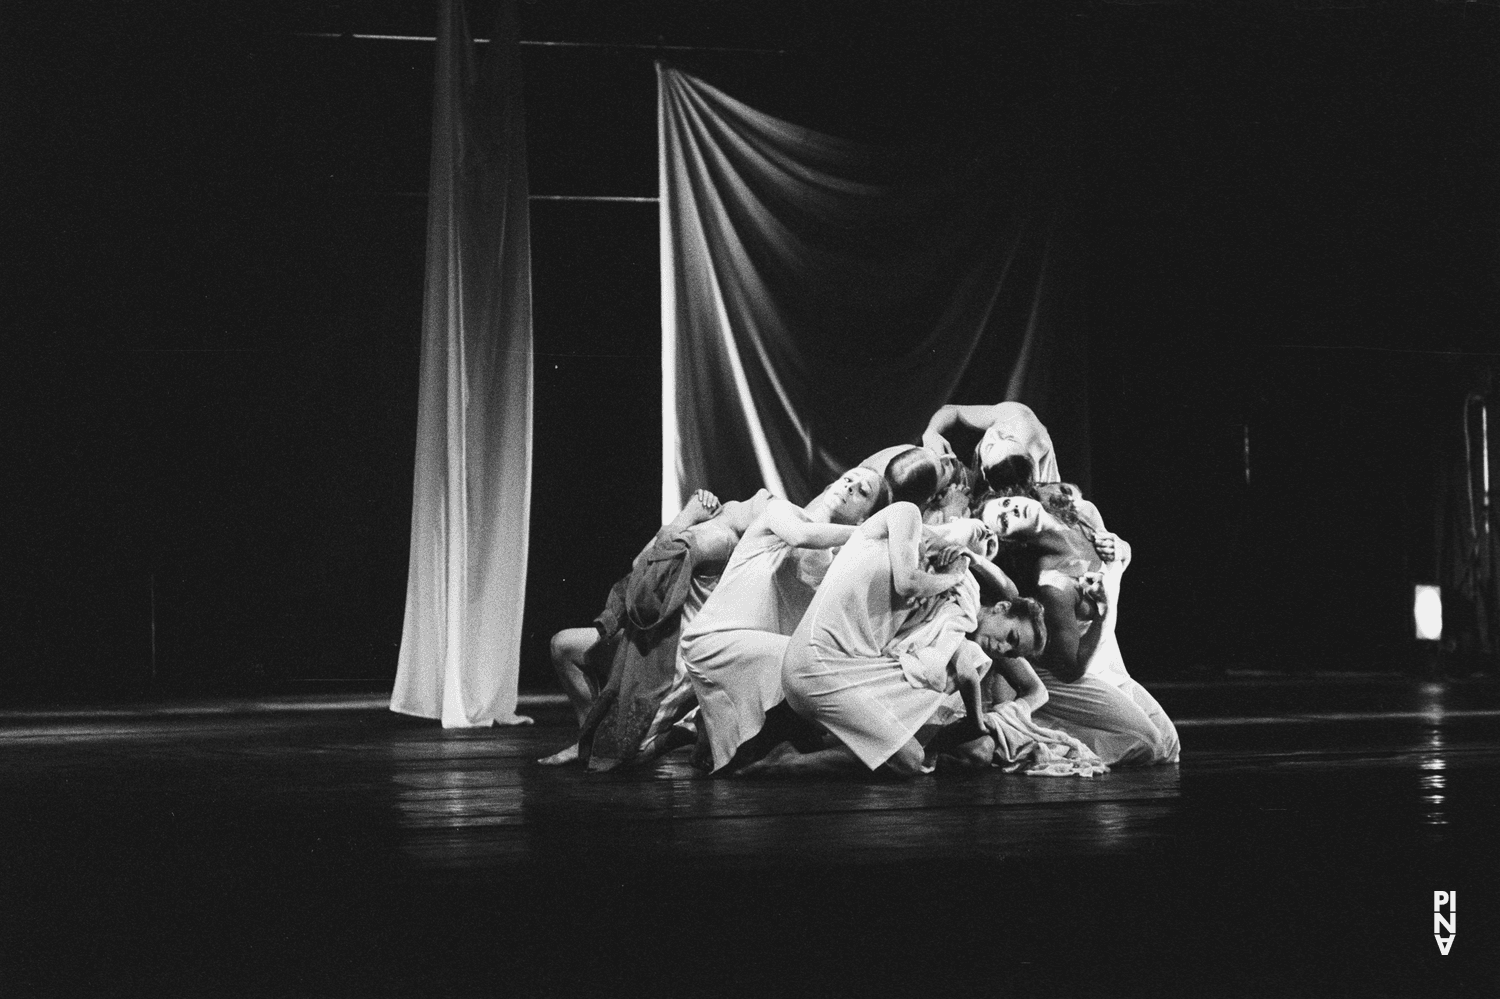 Malou Airaudo in “Iphigenie auf Tauris” by Pina Bausch at Opernhaus Wuppertal, season 1973/74